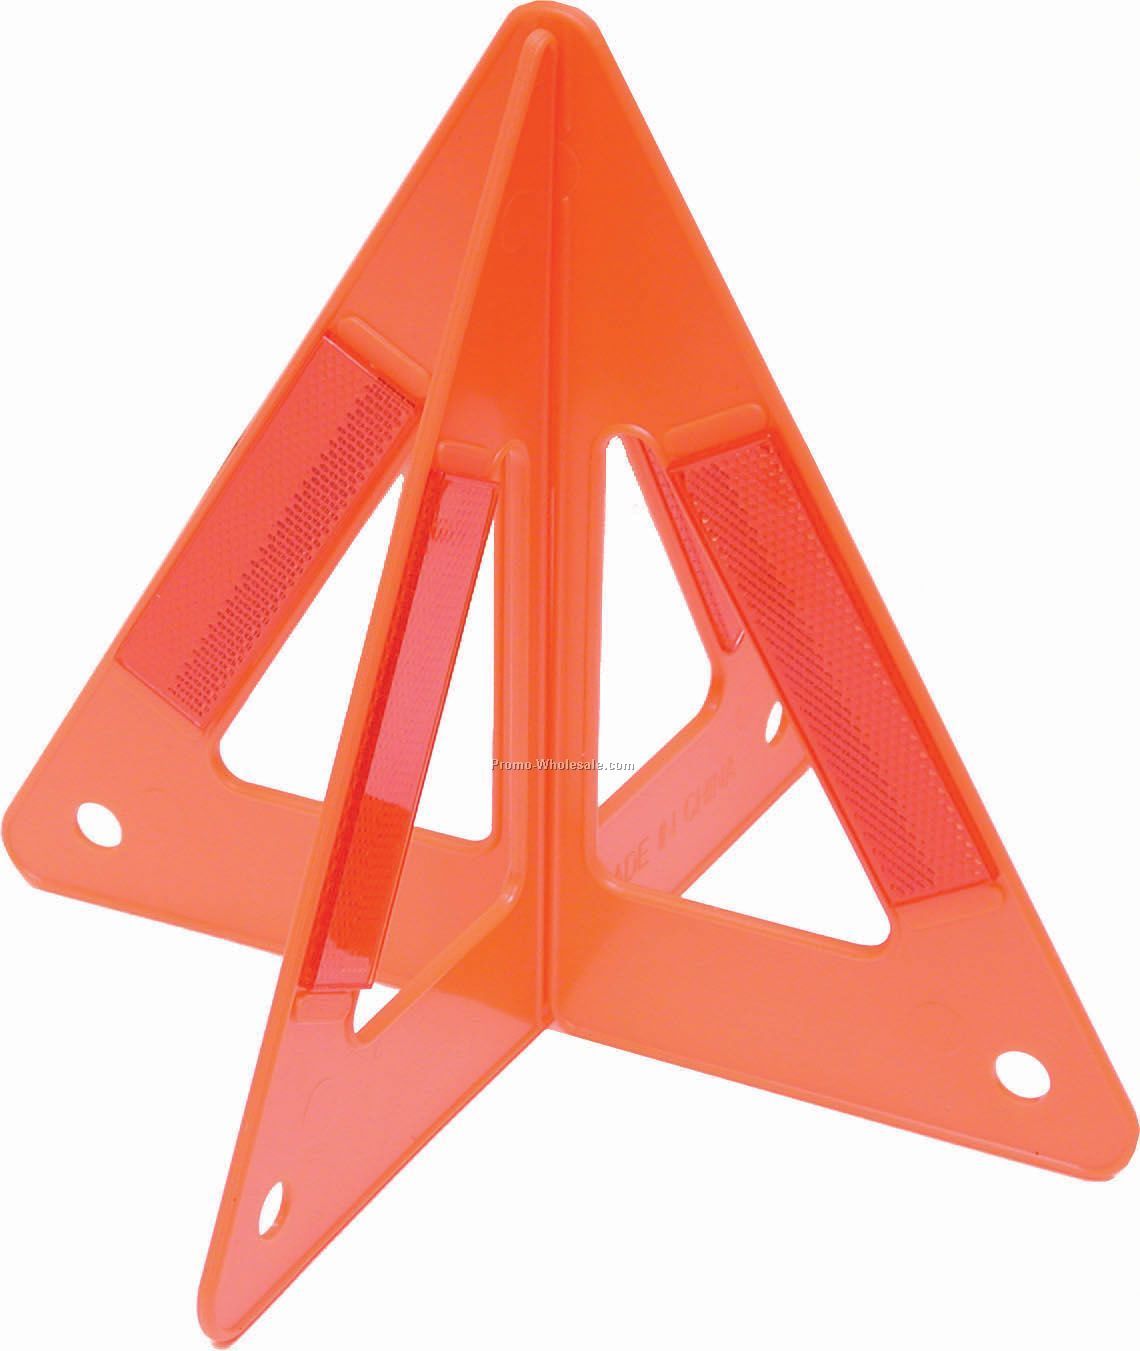 Warning Triangles (Blank)